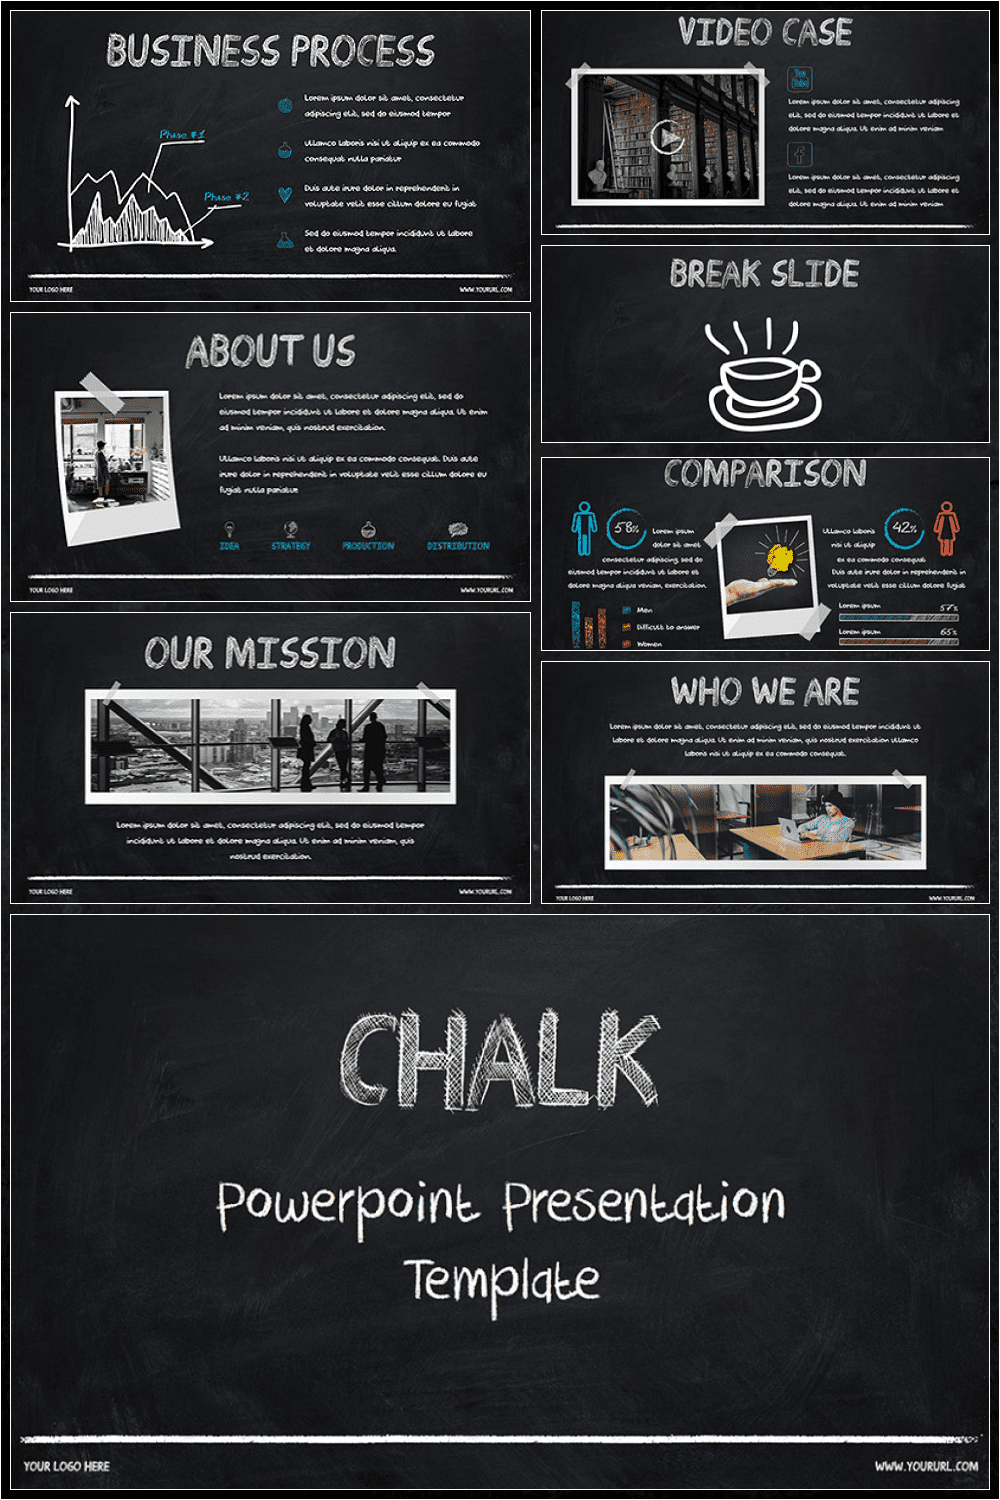 Chalk - Powerpoint Template by MasterBundles Pinterest Collage Image.